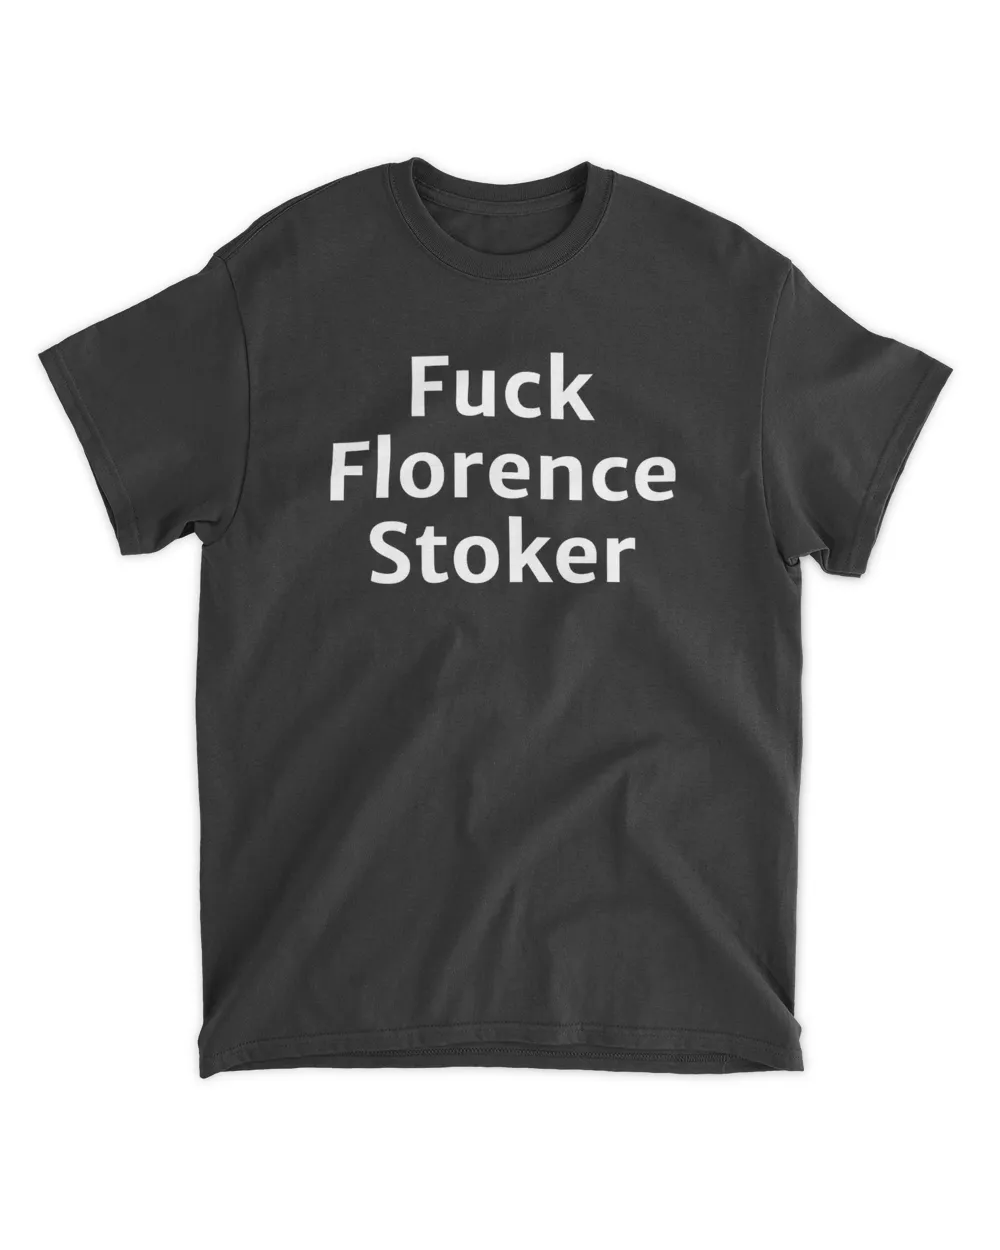 Fuck Florence Stoker Shirt